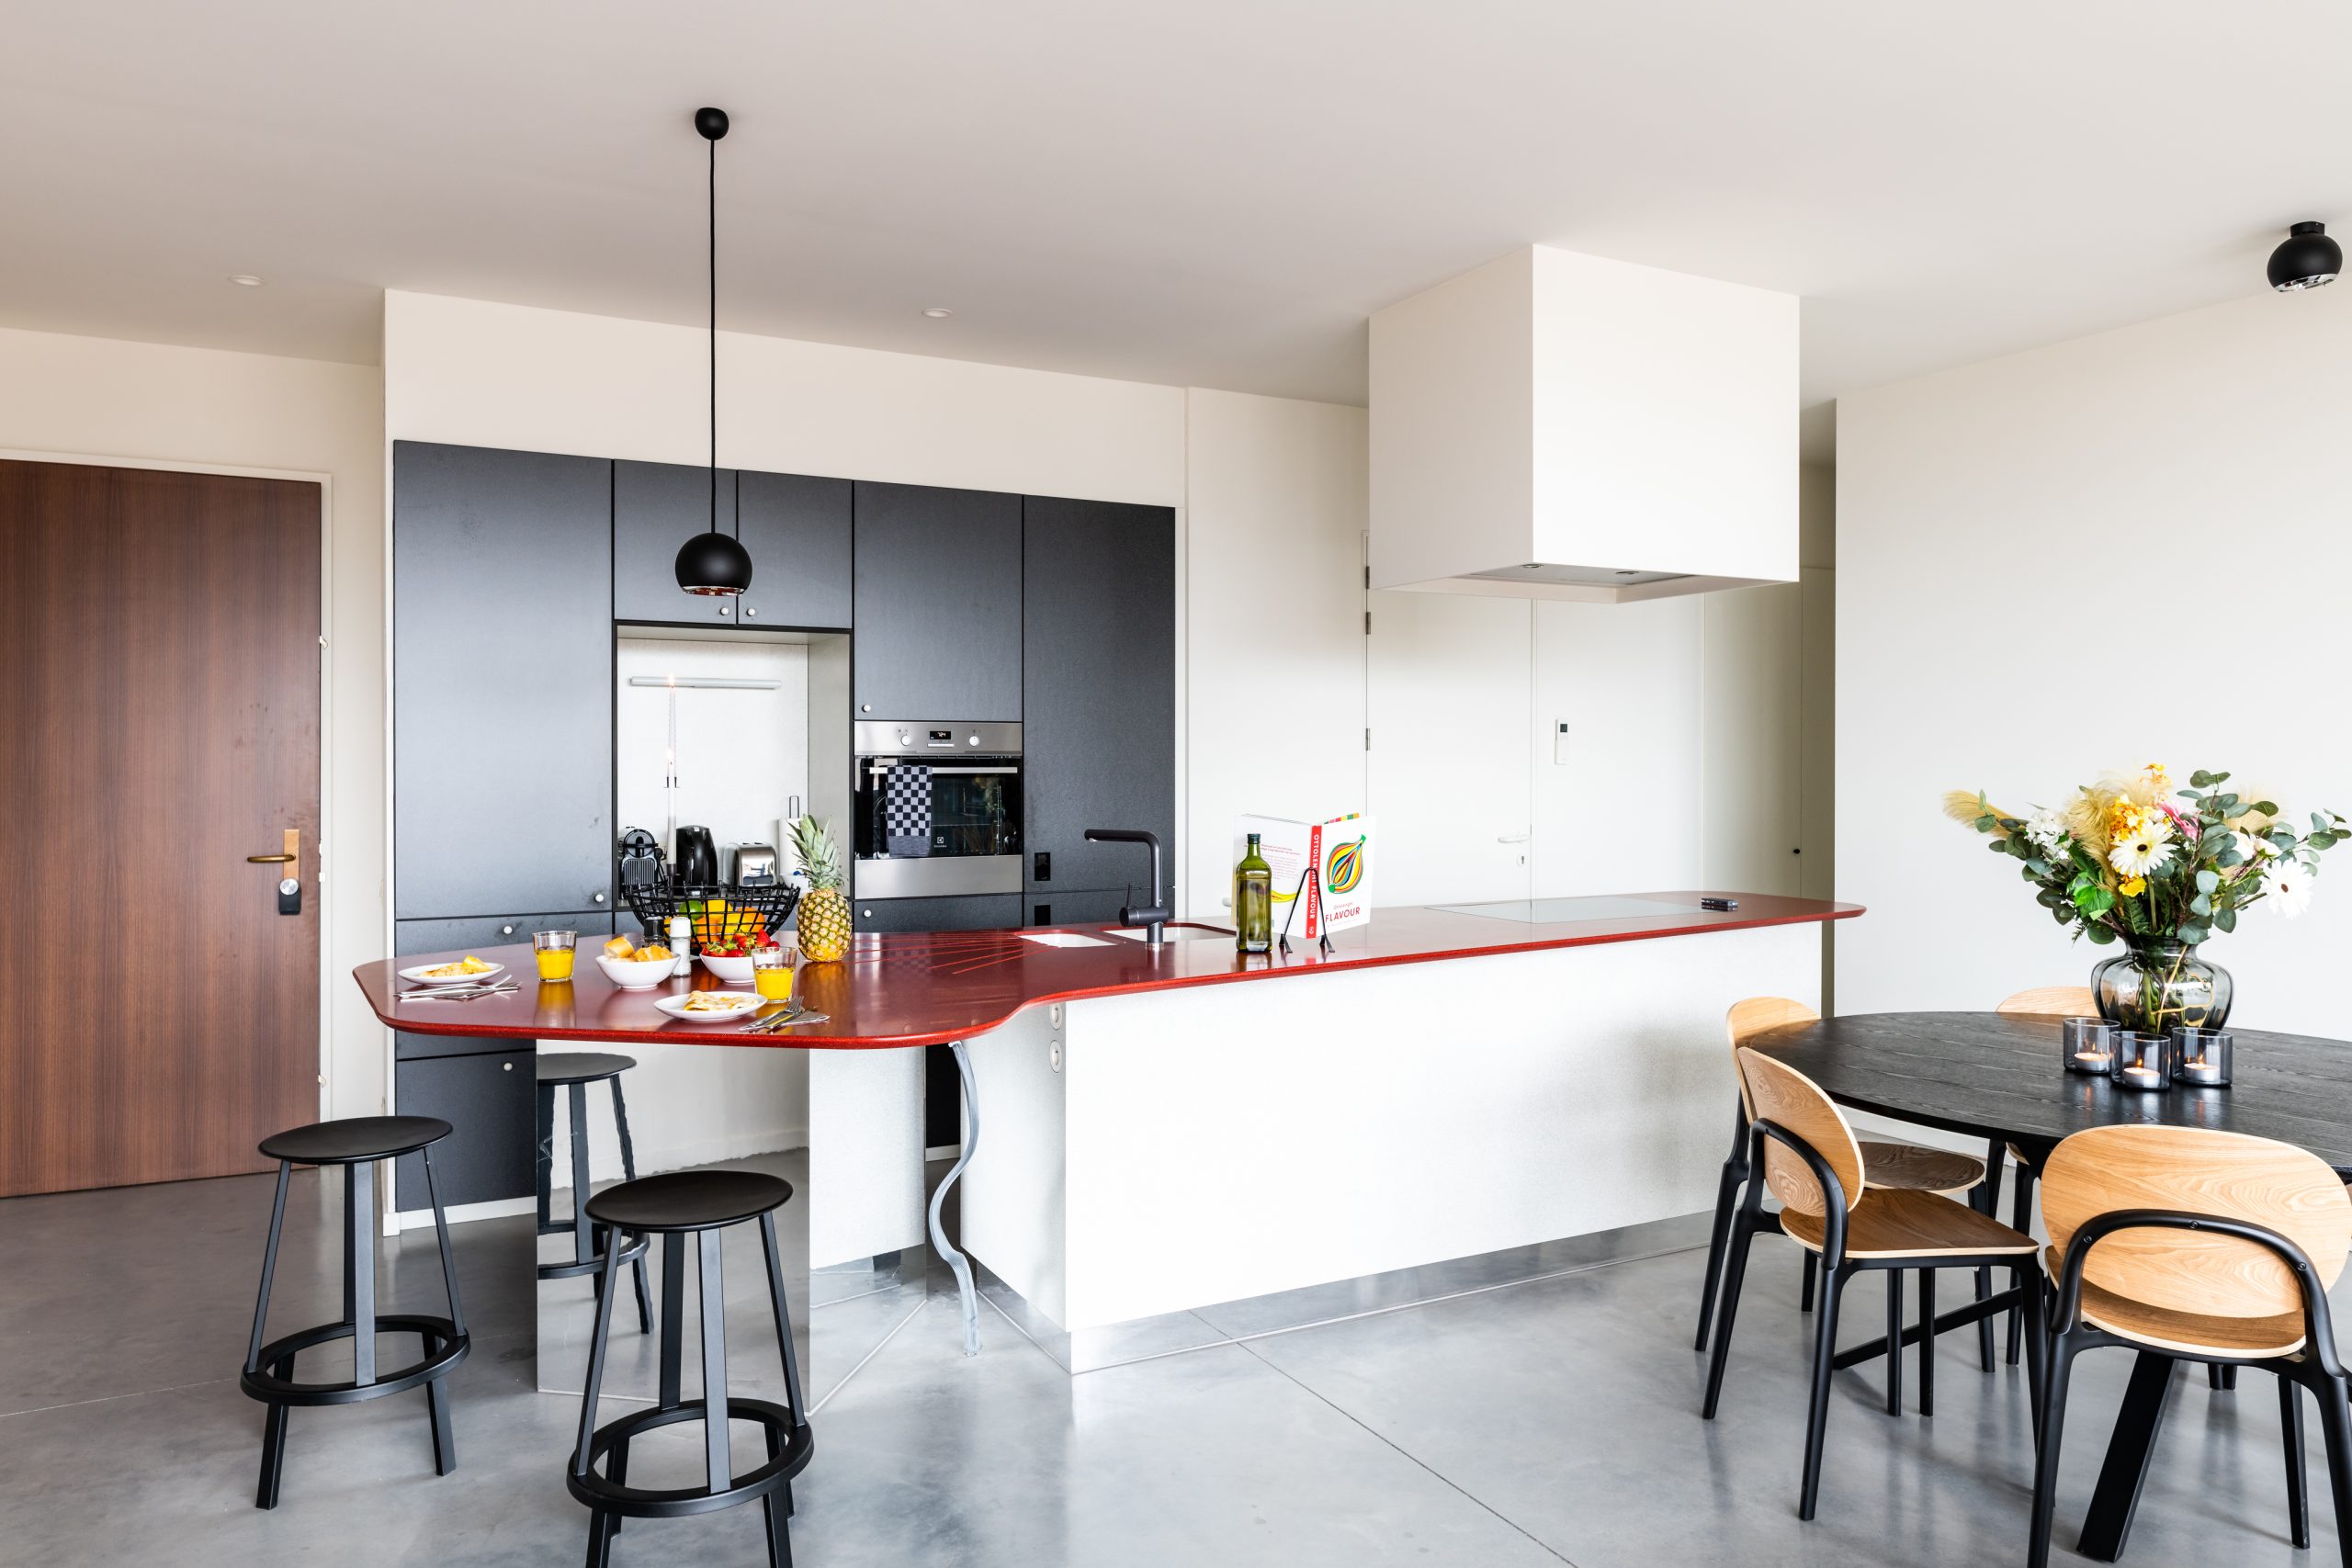 Kitchen 2-bedroom for rent in Brussels